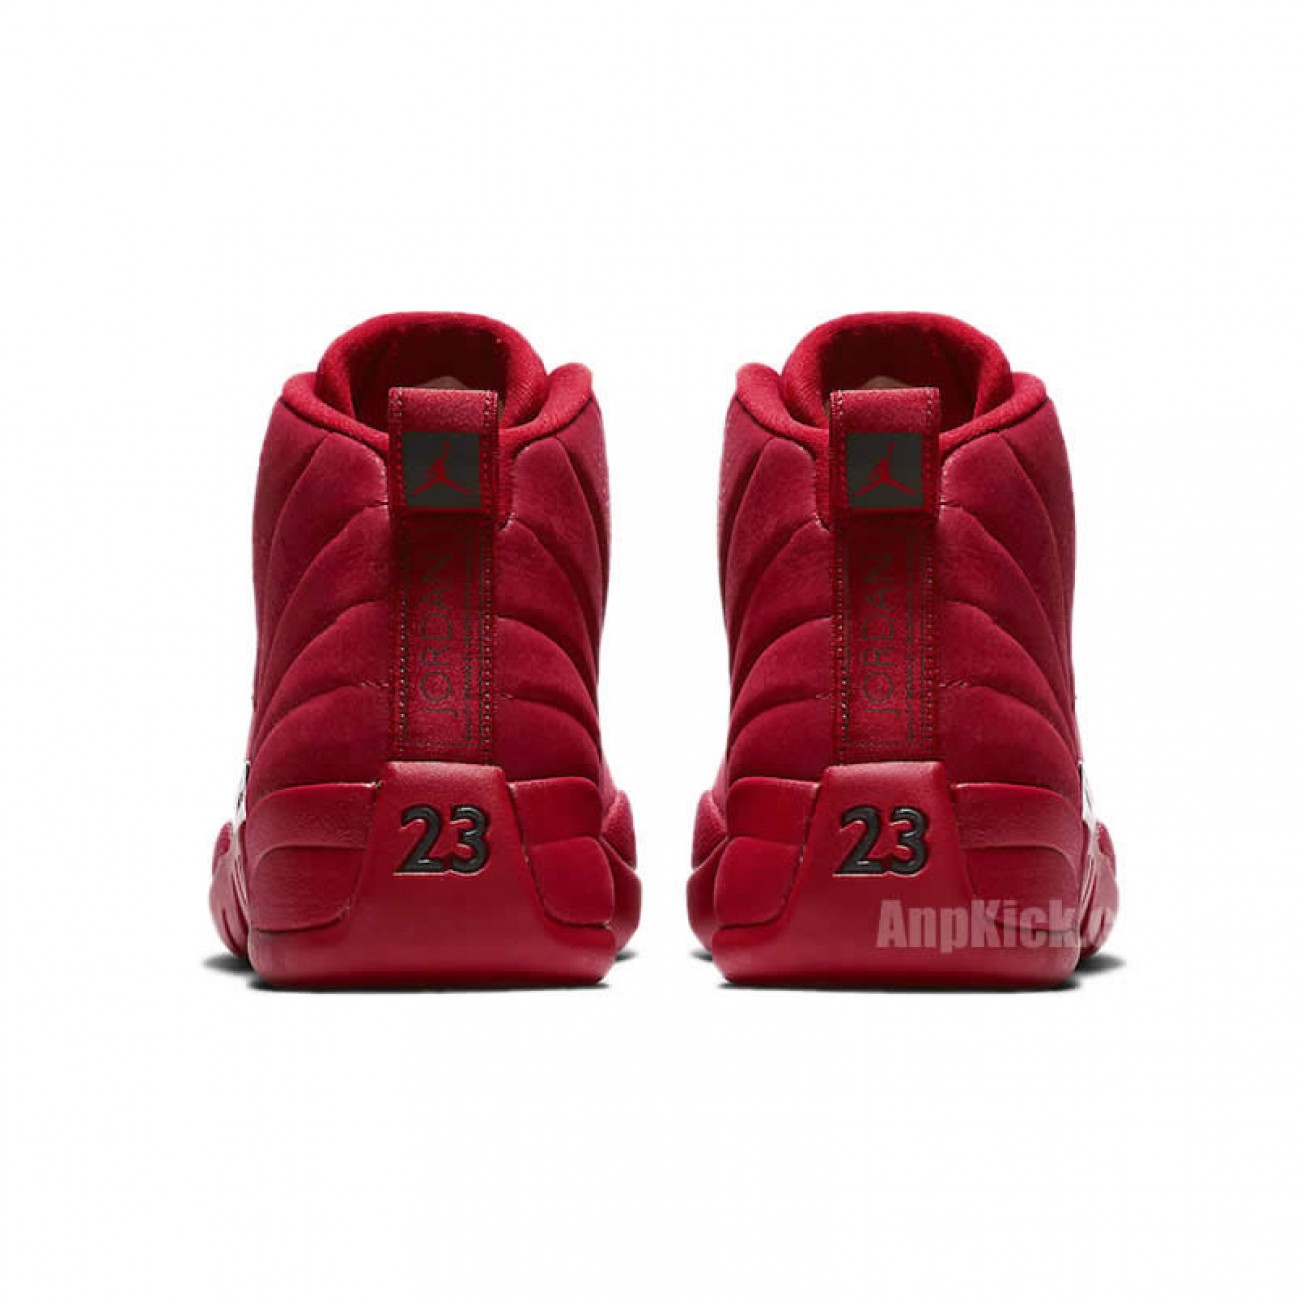 Air Jordan 12 "Gym Red" 2018 Bulls Black Friday Price Retail For Sale 130690-601